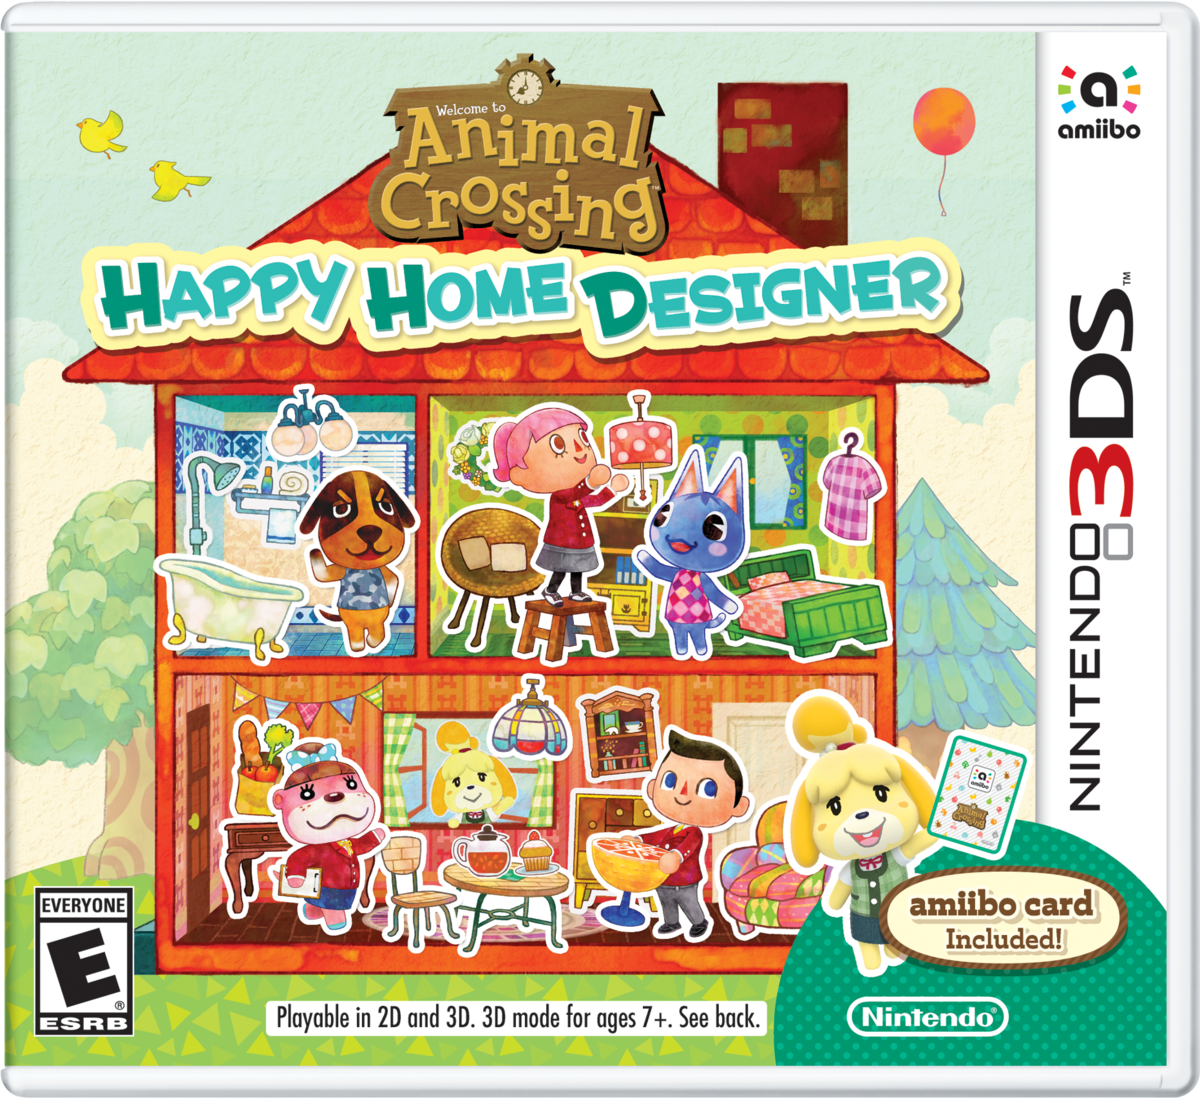 Nintendo DS - Animal Crossing Wiki - Nookipedia